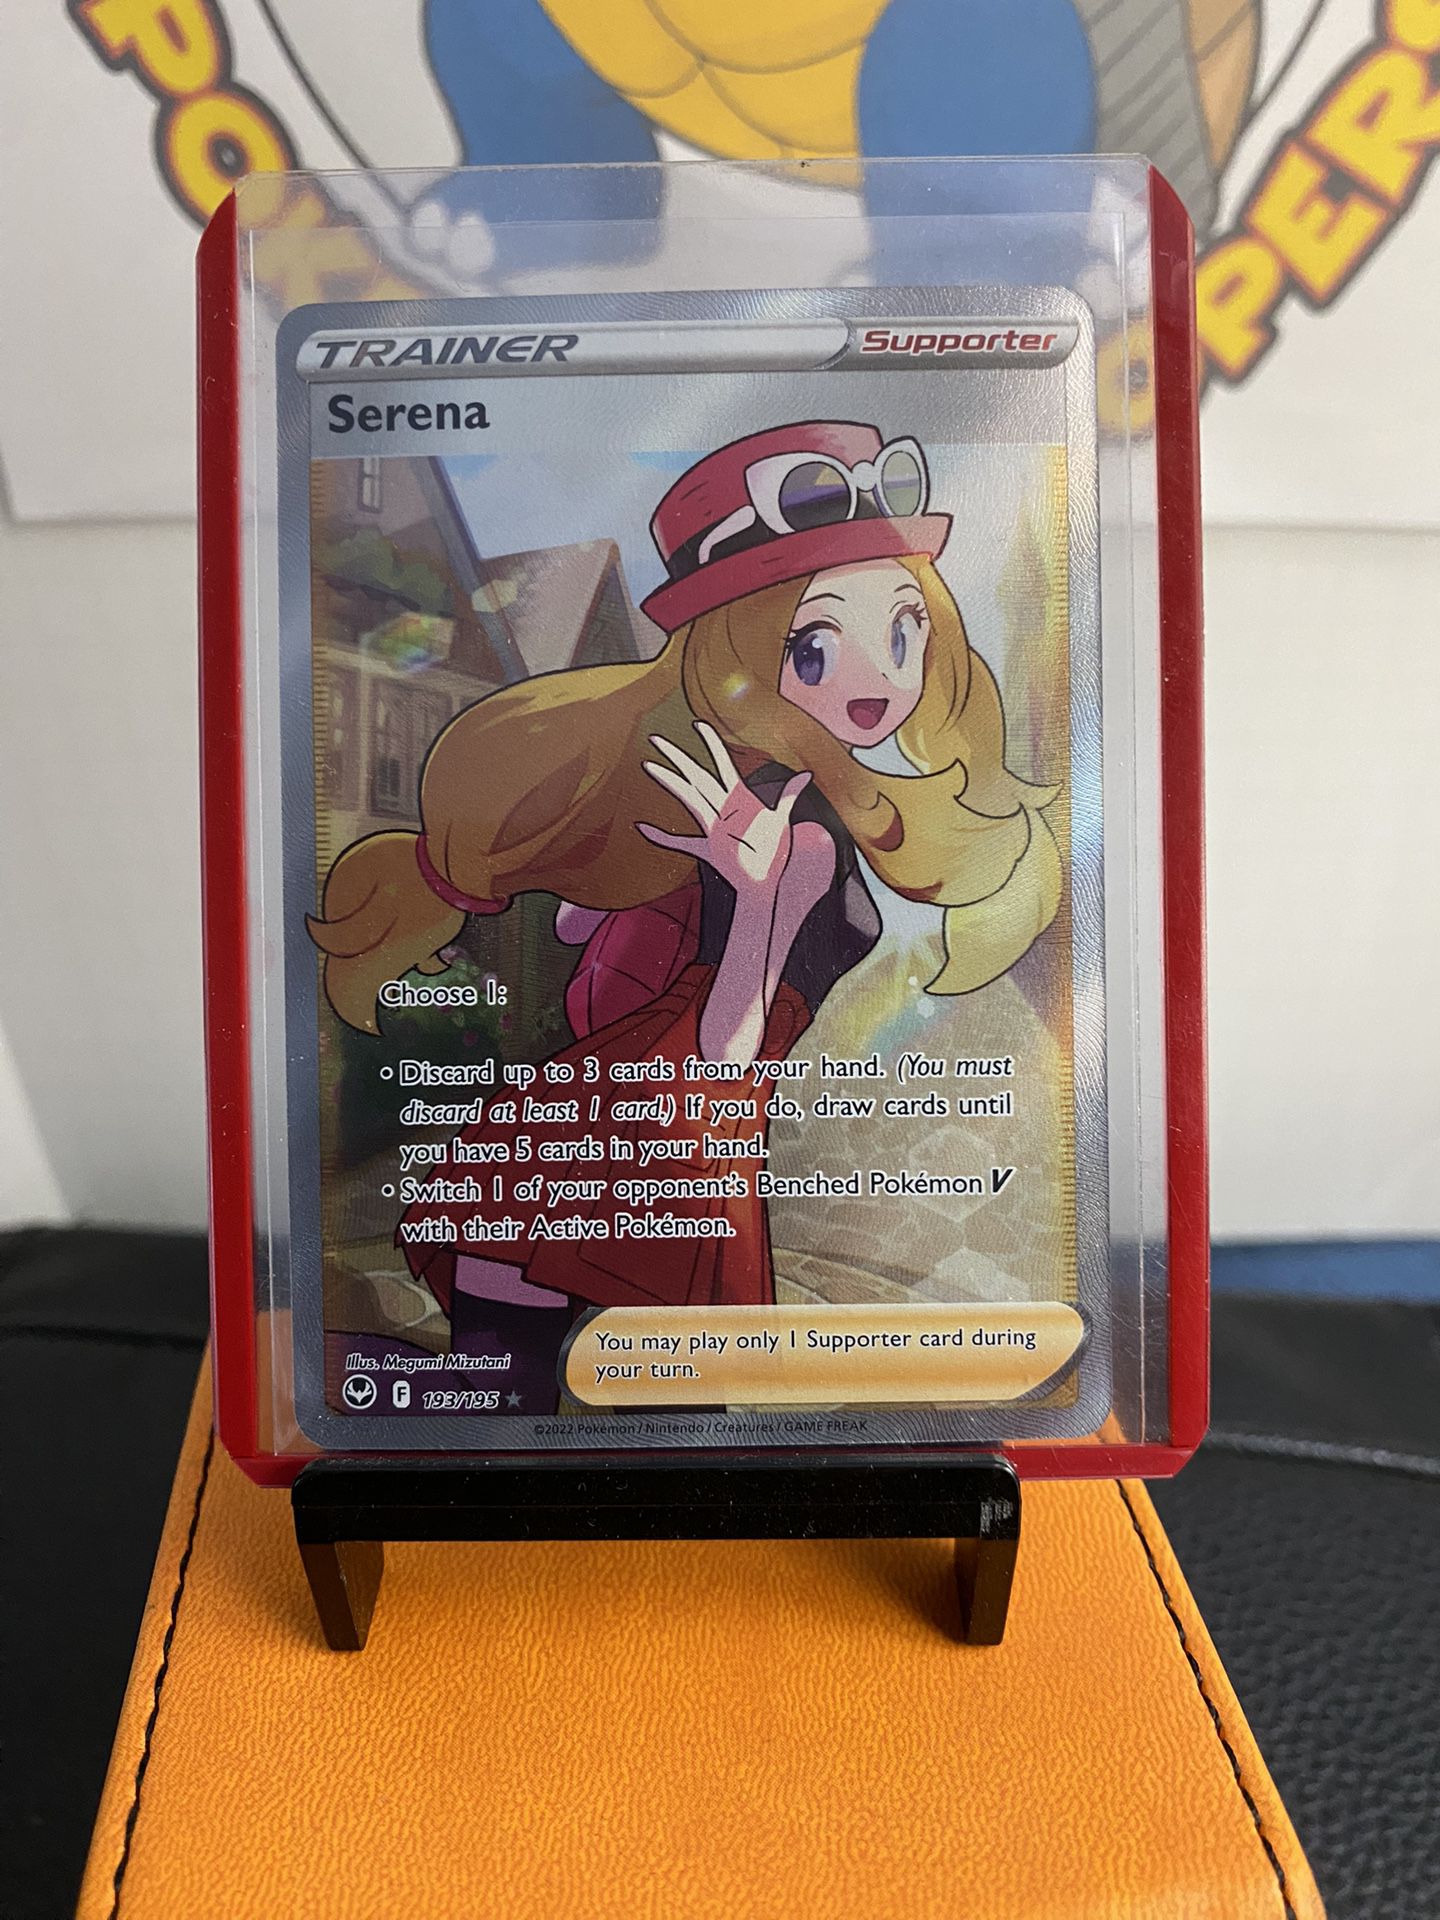 SERENA Trainer Pokémon card - Mint 